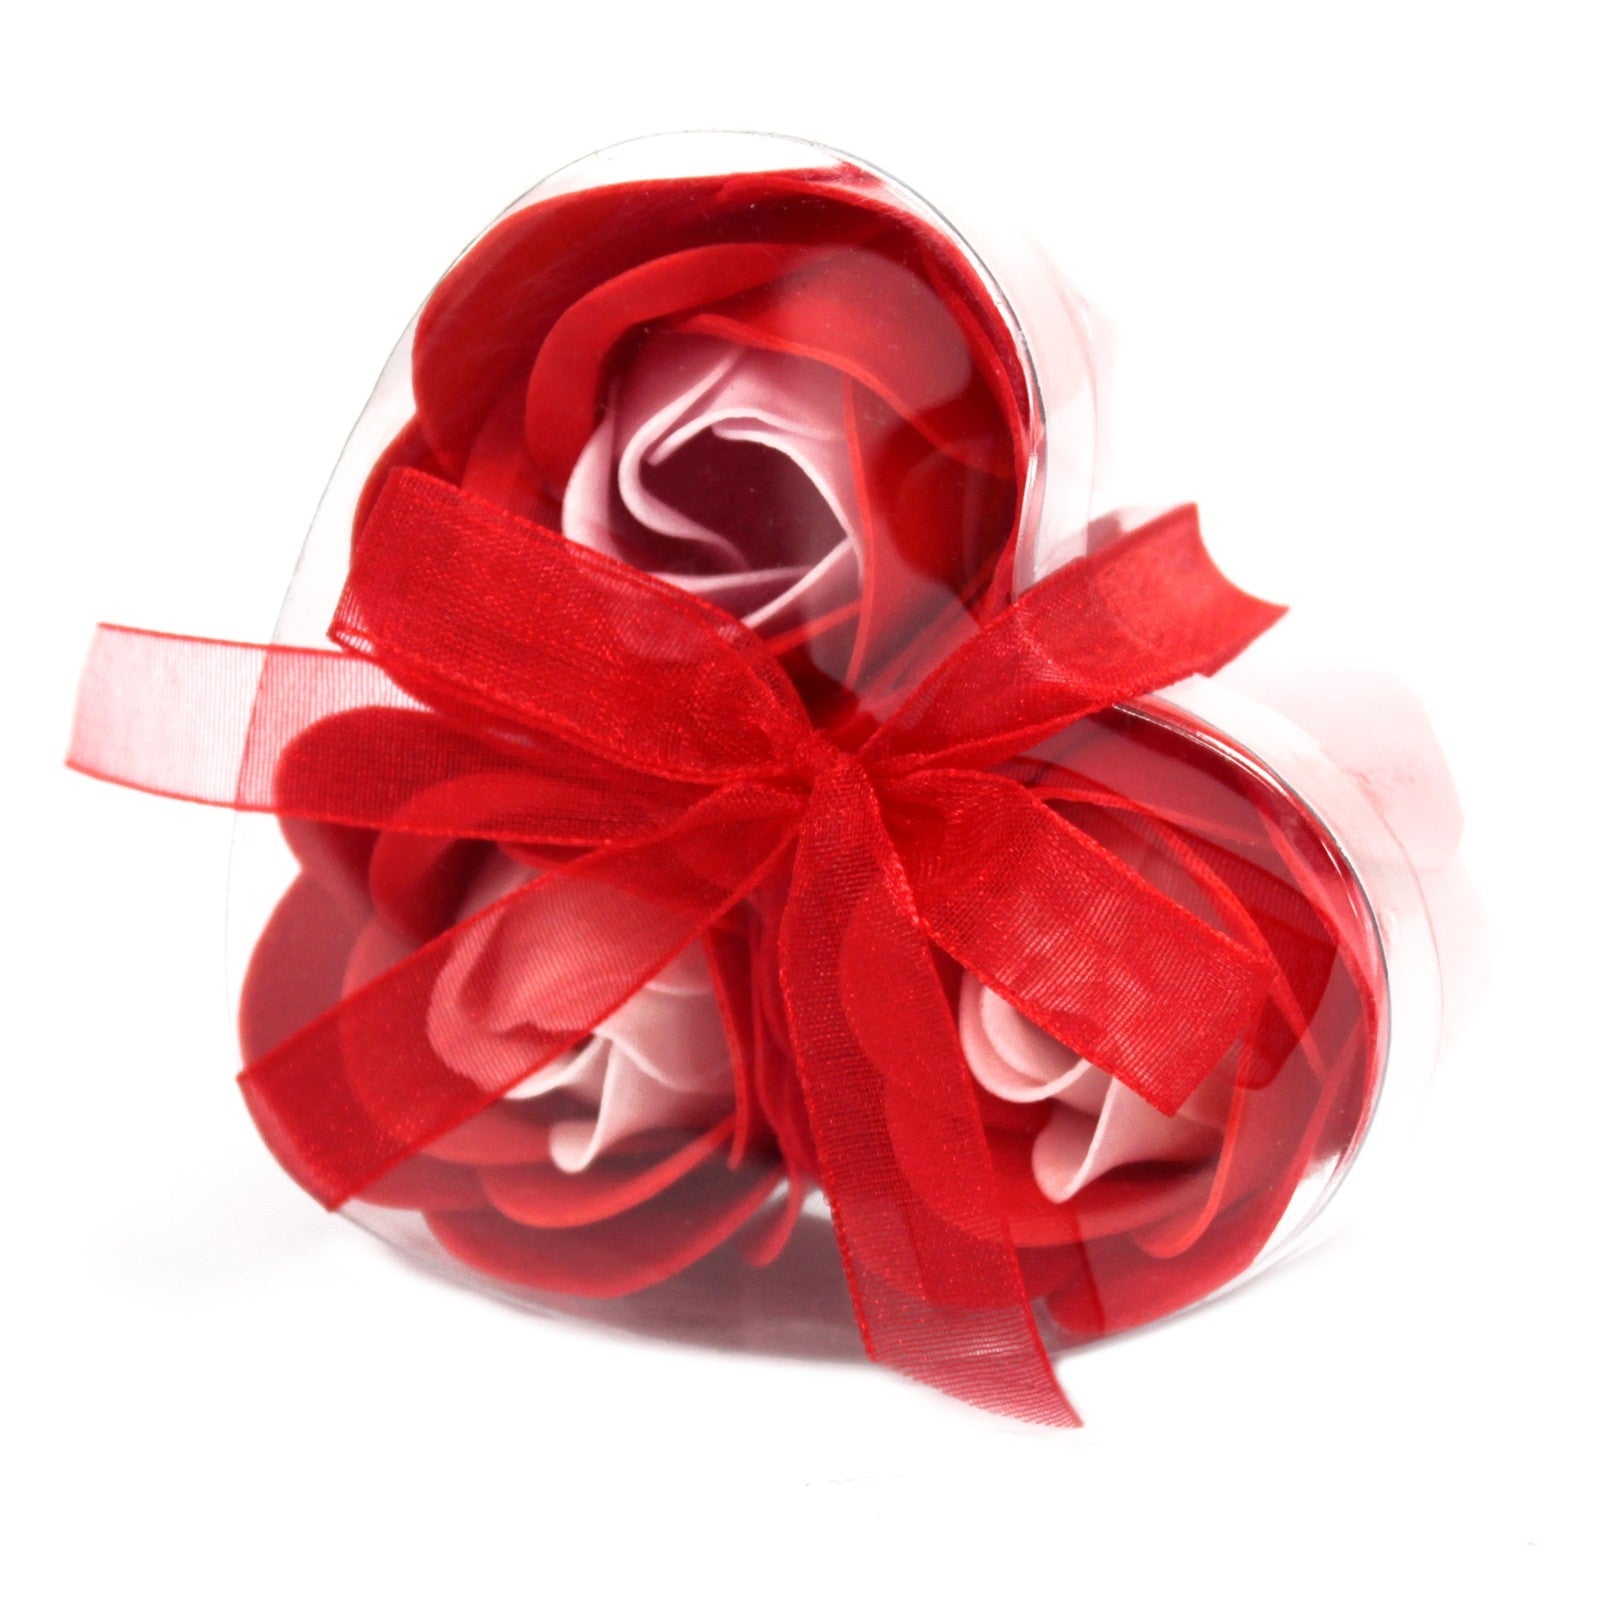 Set of 3 Soap Flower Heart Box - Red Roses - Ultrabee